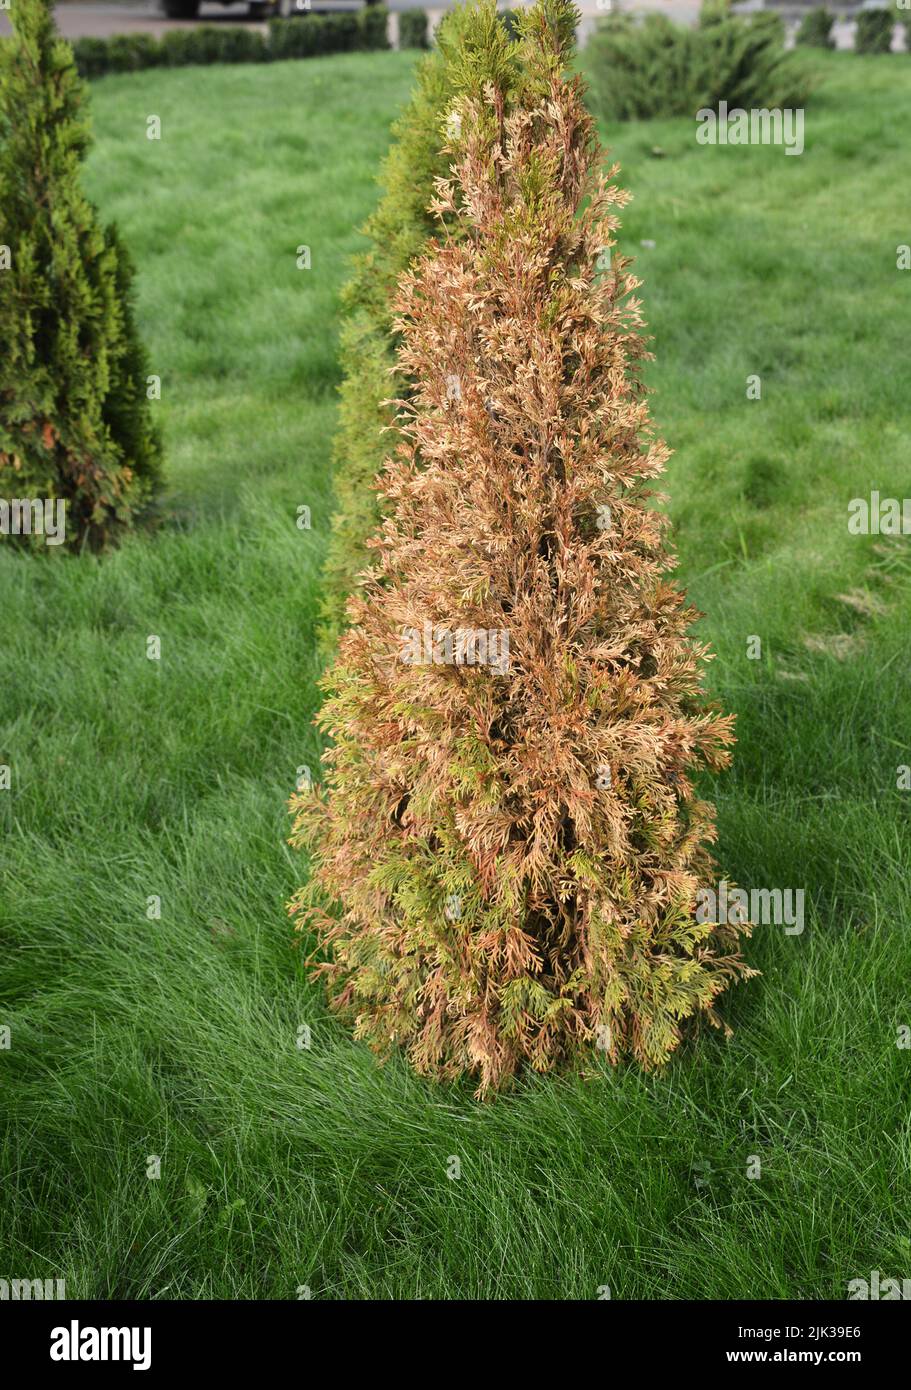 Arborvitae, thuja care, and disease treatment. Evergreen arborvitae, thuja tree is turning brown, dying. Stock Photo